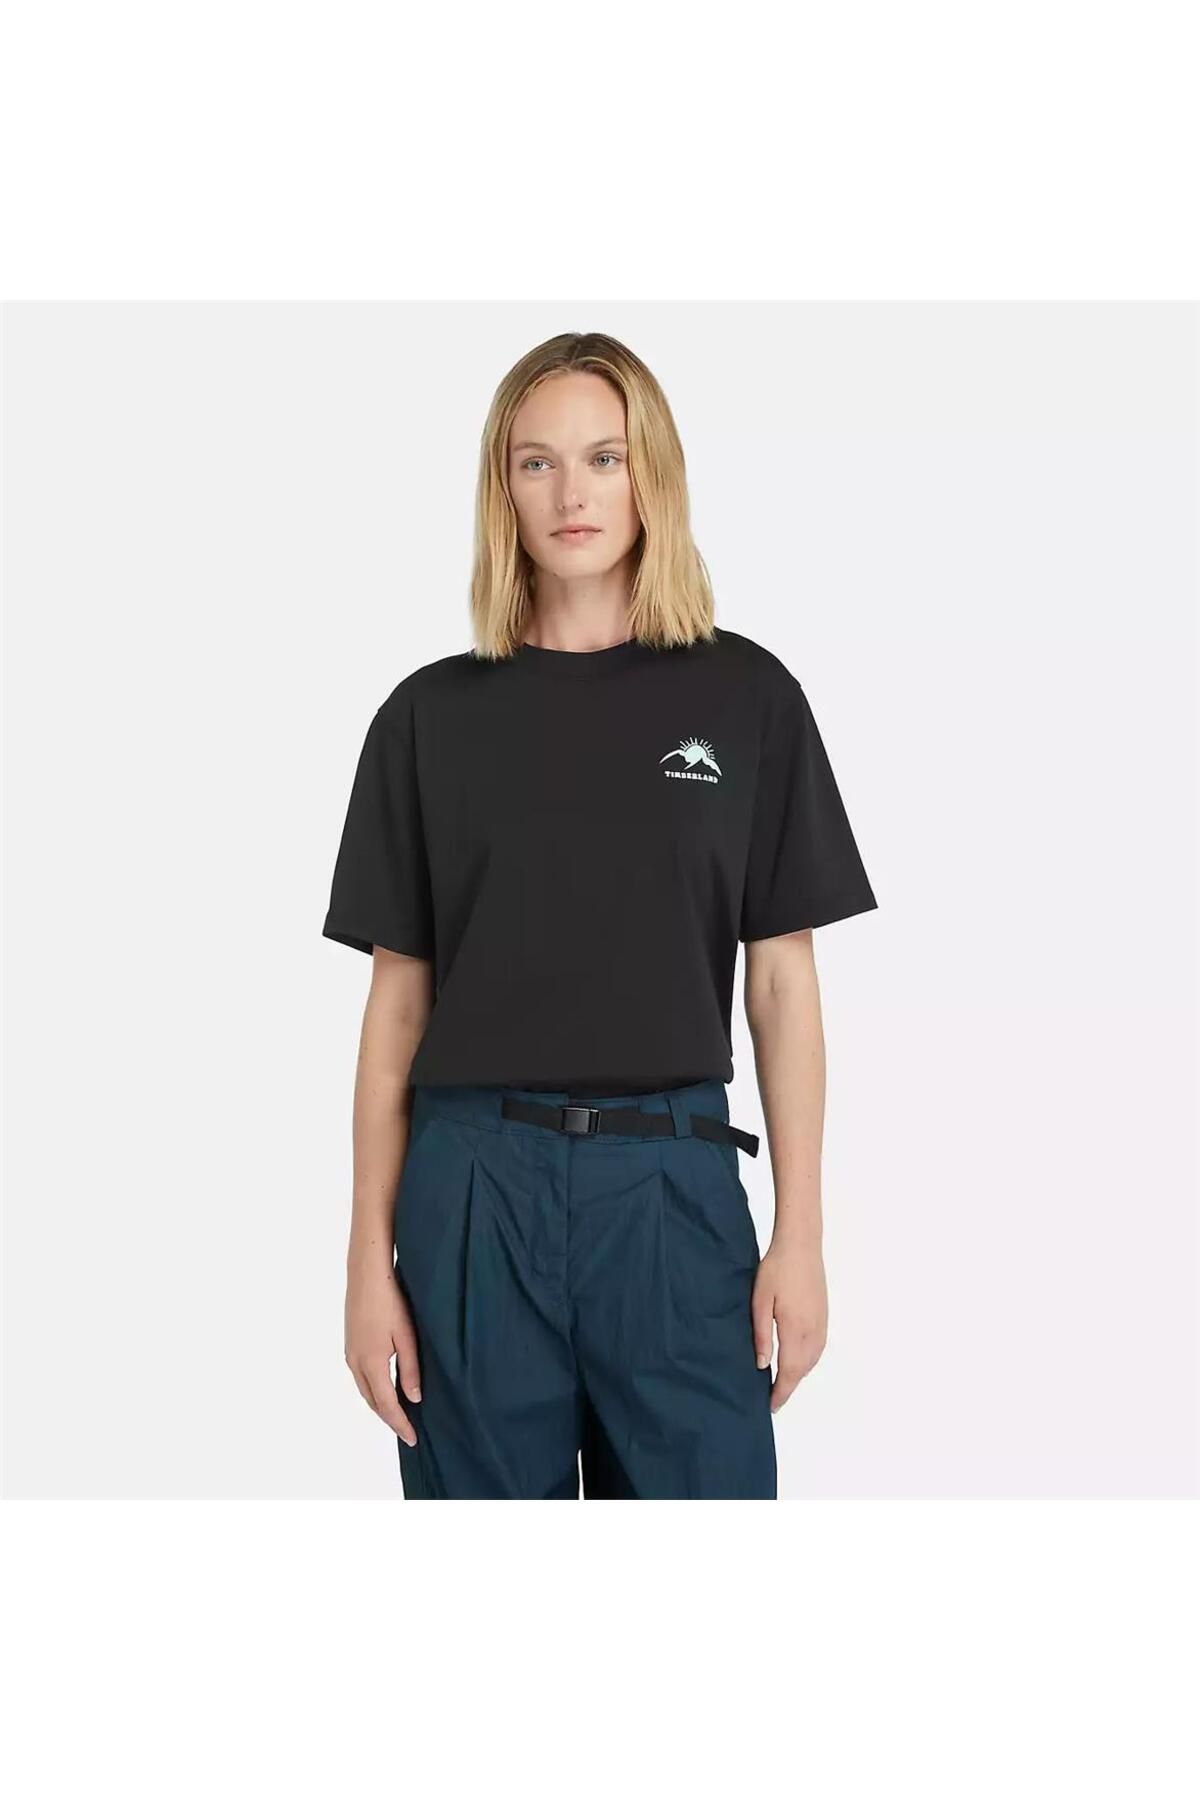 Timberland Hıke Lıfe Graphıc Short-Sleeve Tee Siyah Kadın T-Shirt